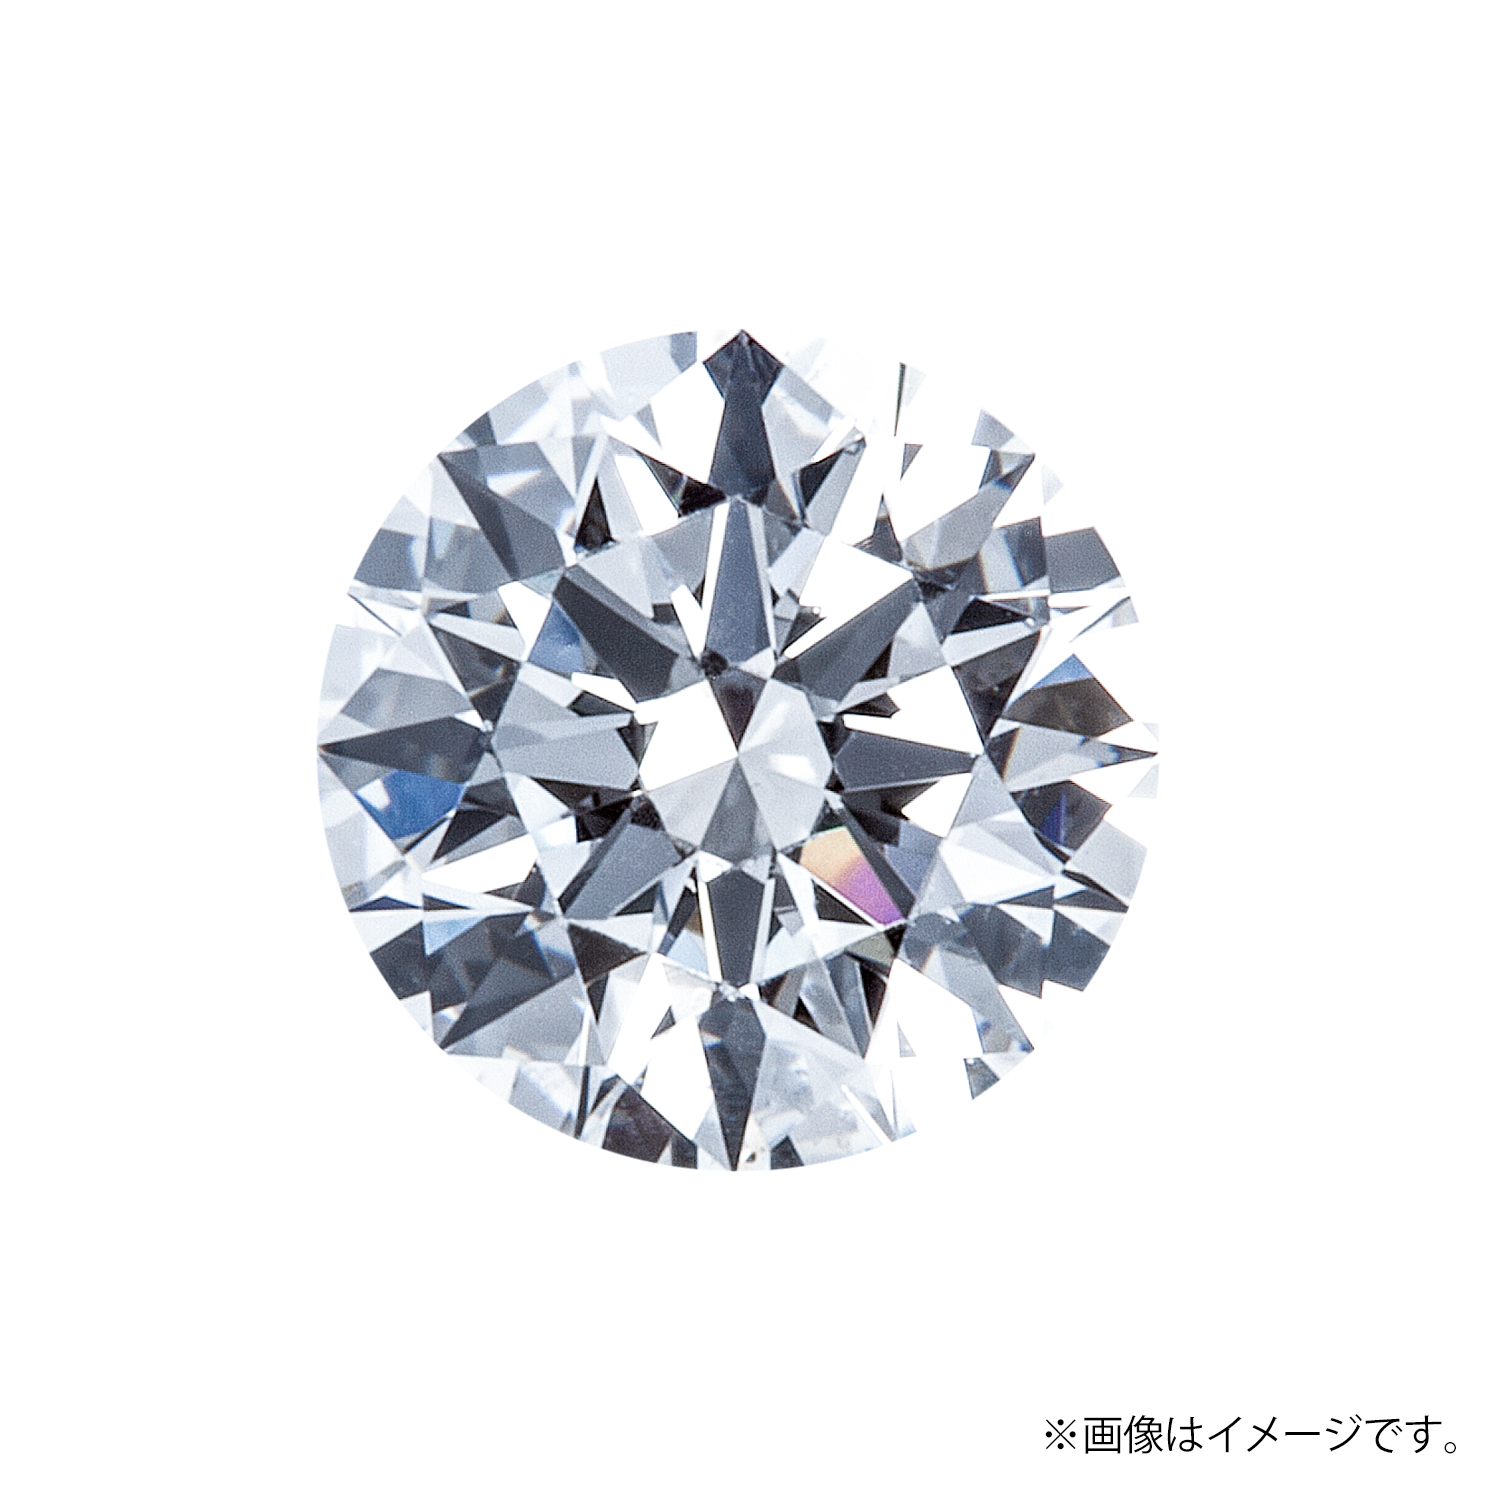 0.253ct Round ダイヤモンド / D / VVS1 / 3EX H&C